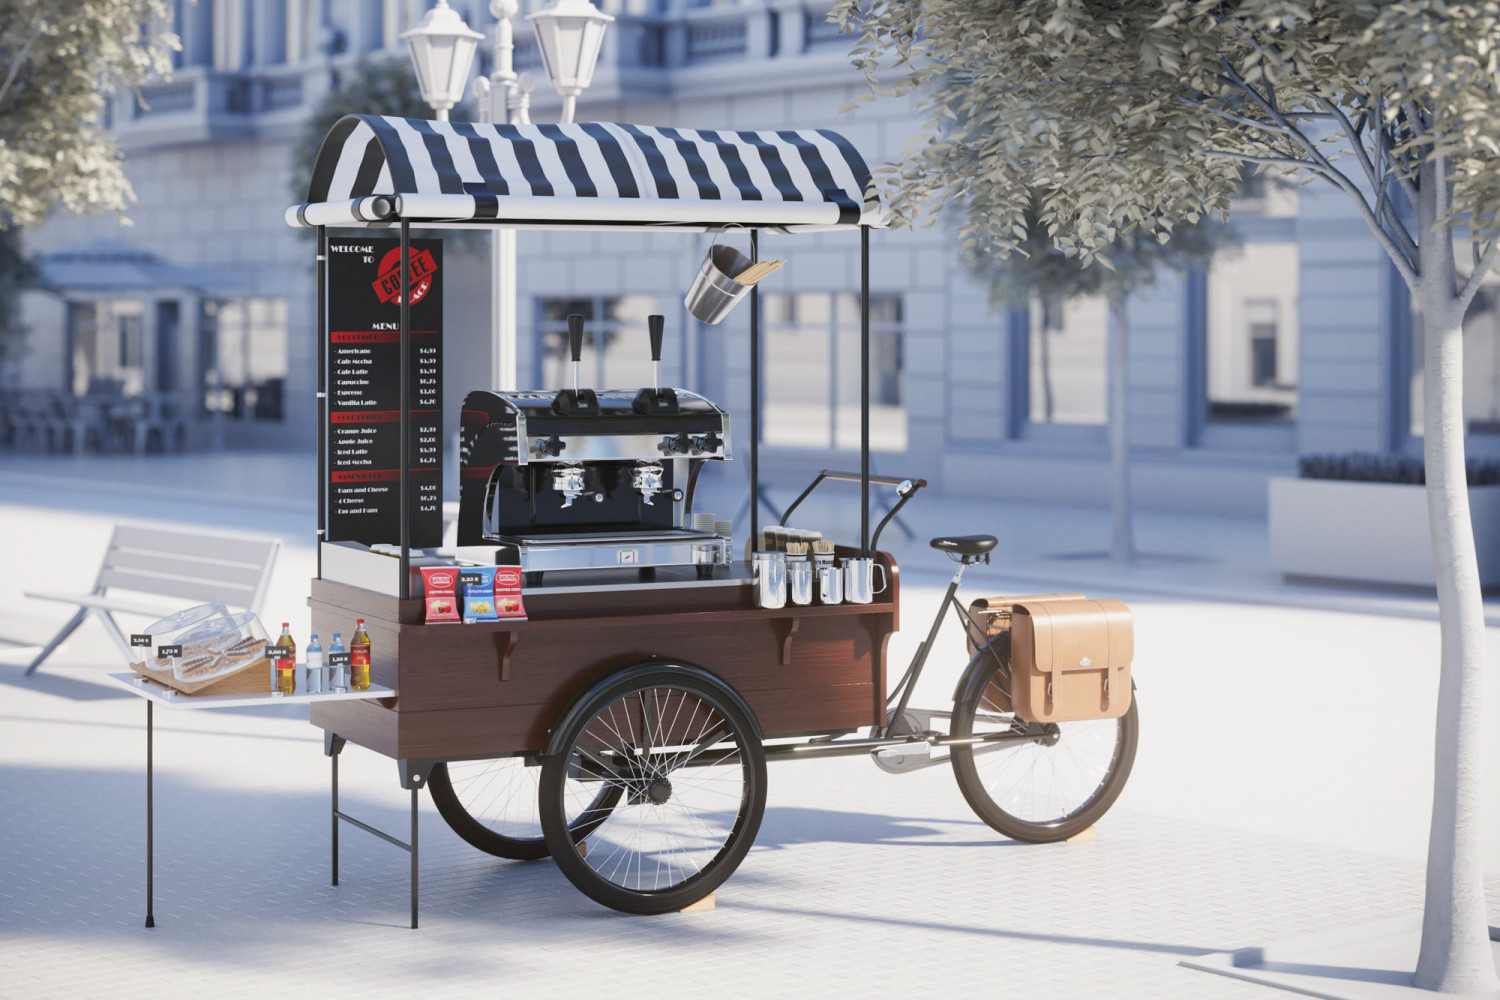 mobile coffee cart business plan